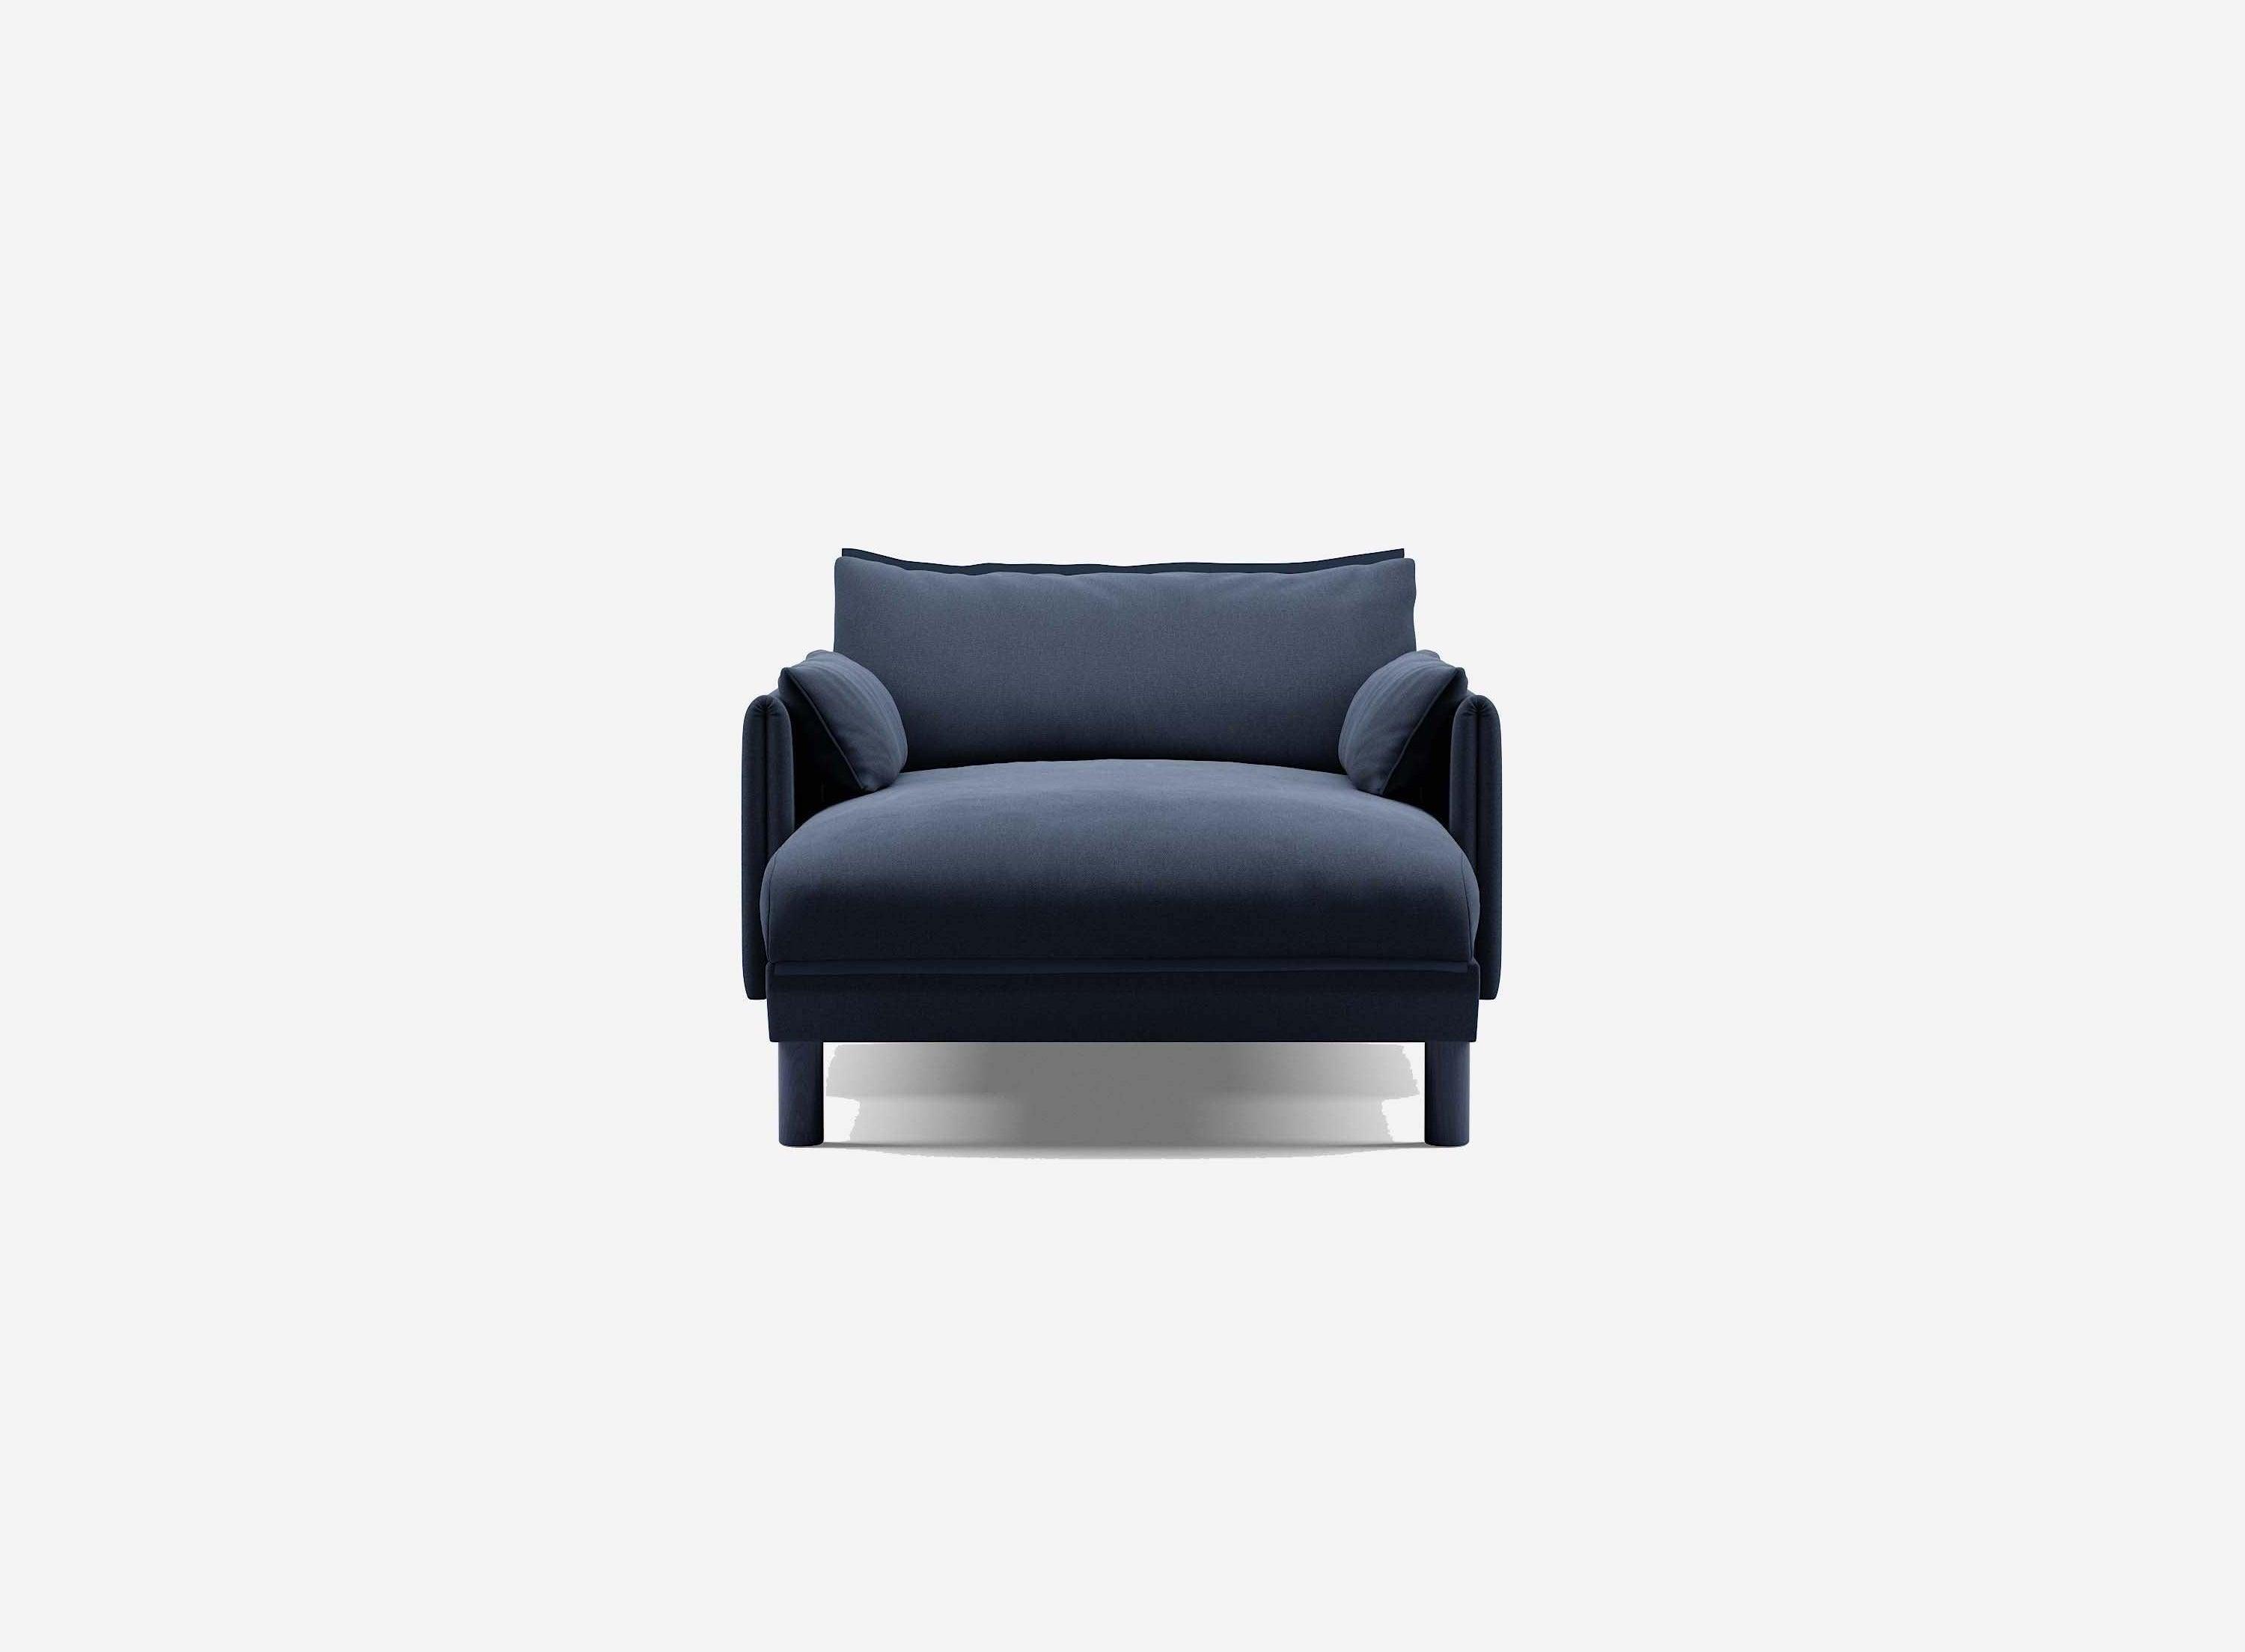 1.5 Seater Chaise Sofa | Cotton Navy  / Fleece Navy - Cozmo @ Navy Cotton Jacket | Dark Blue Trim